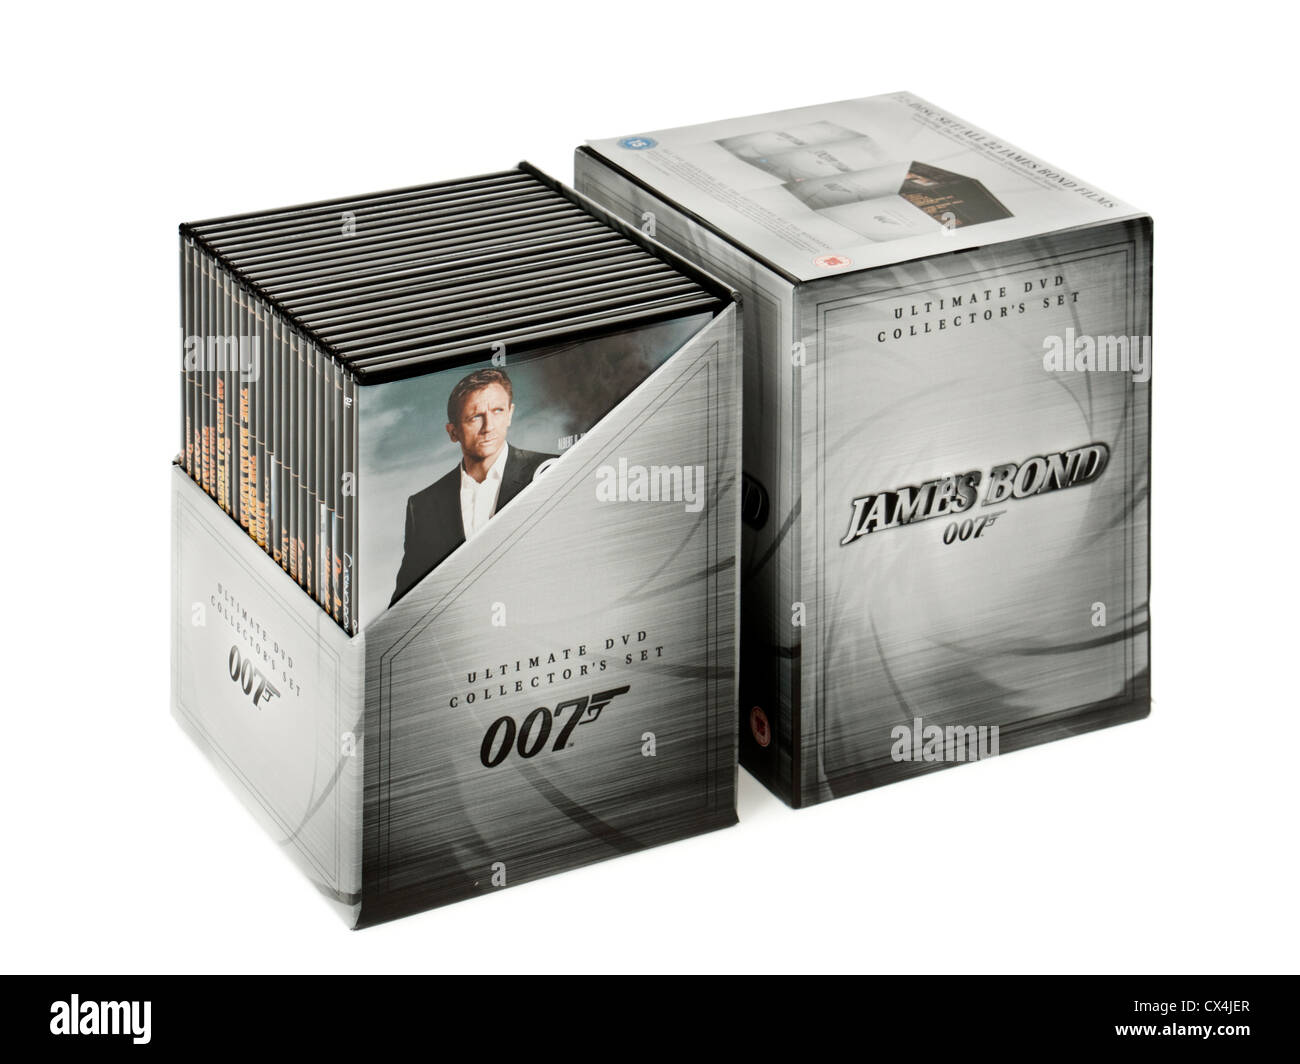 James Bond (007) Ultimate DVD Collector Box Set Banque D'Images